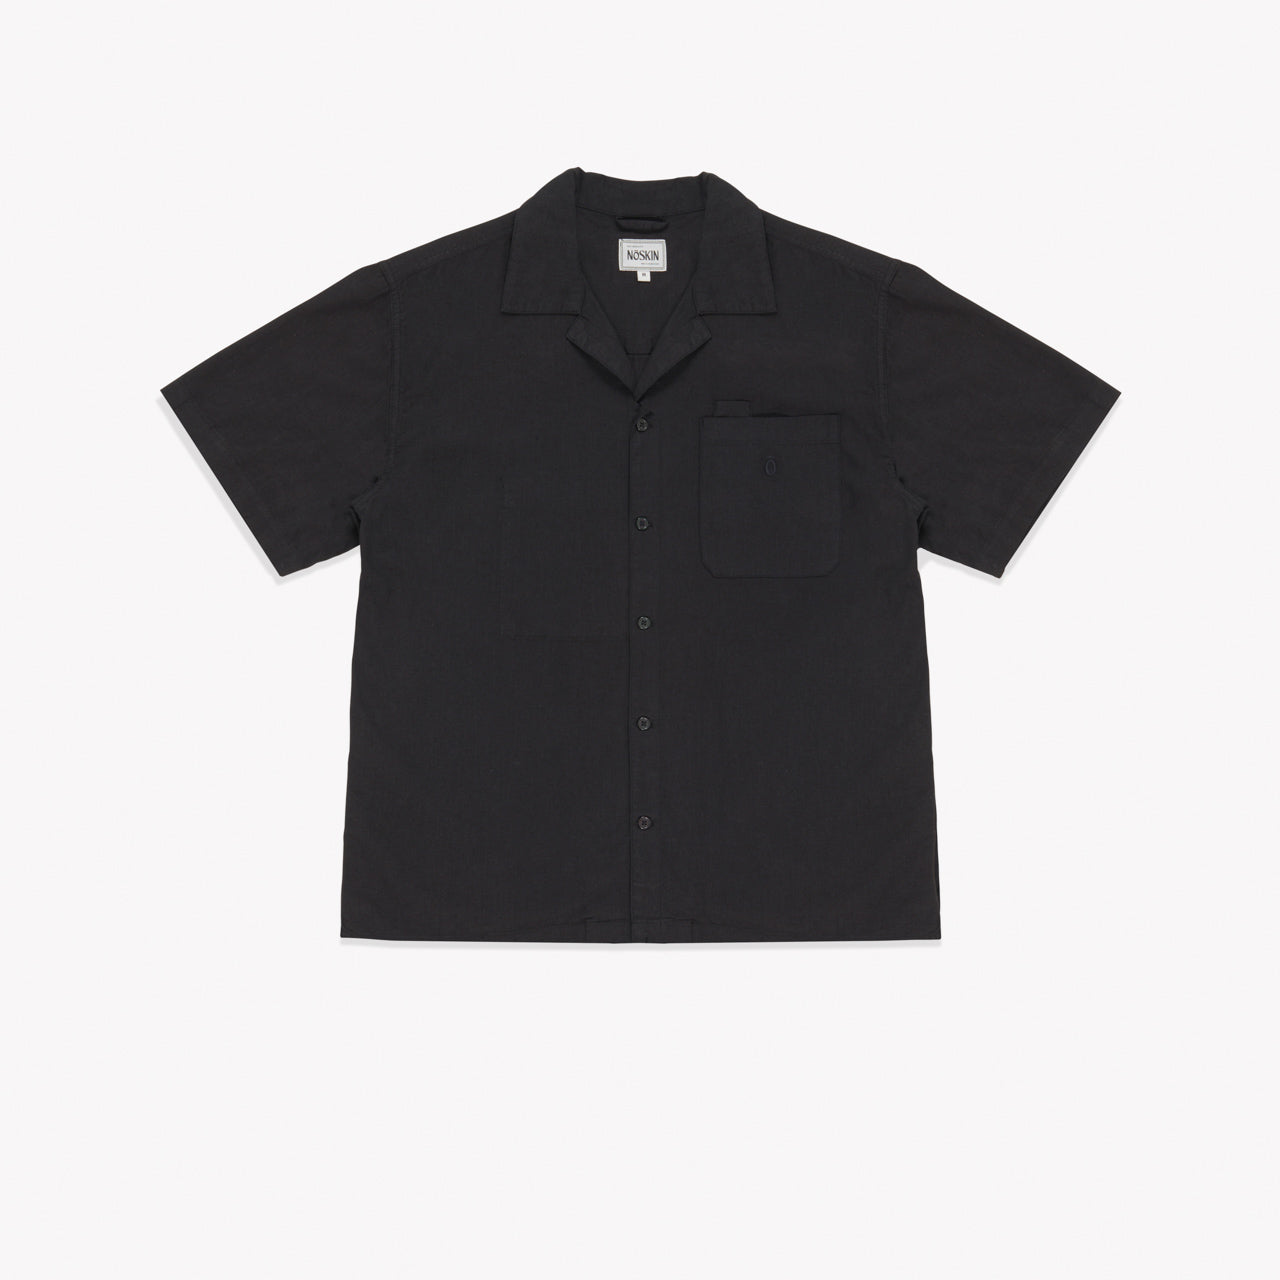 The Noskin Hemp and Organic Cotton Easey Short Sleeve Shirt in black